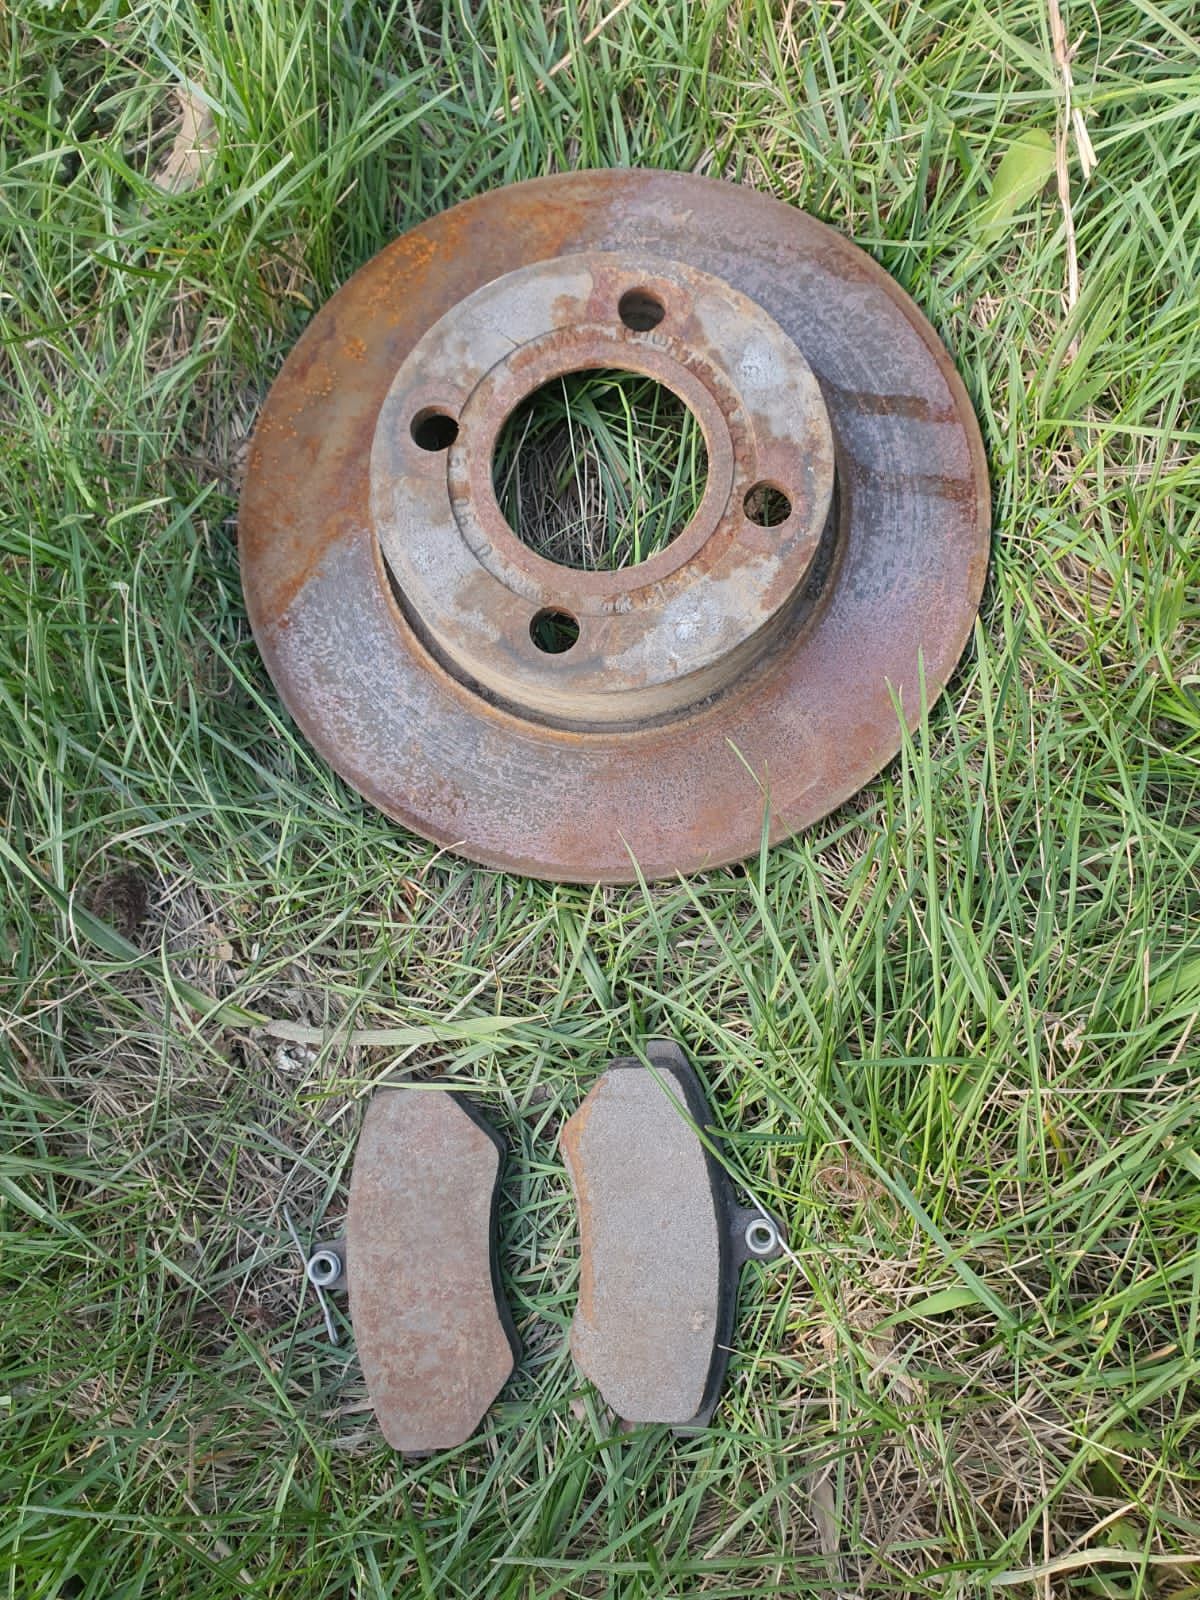 Тормозной диск и колодки Ауди 80 б3